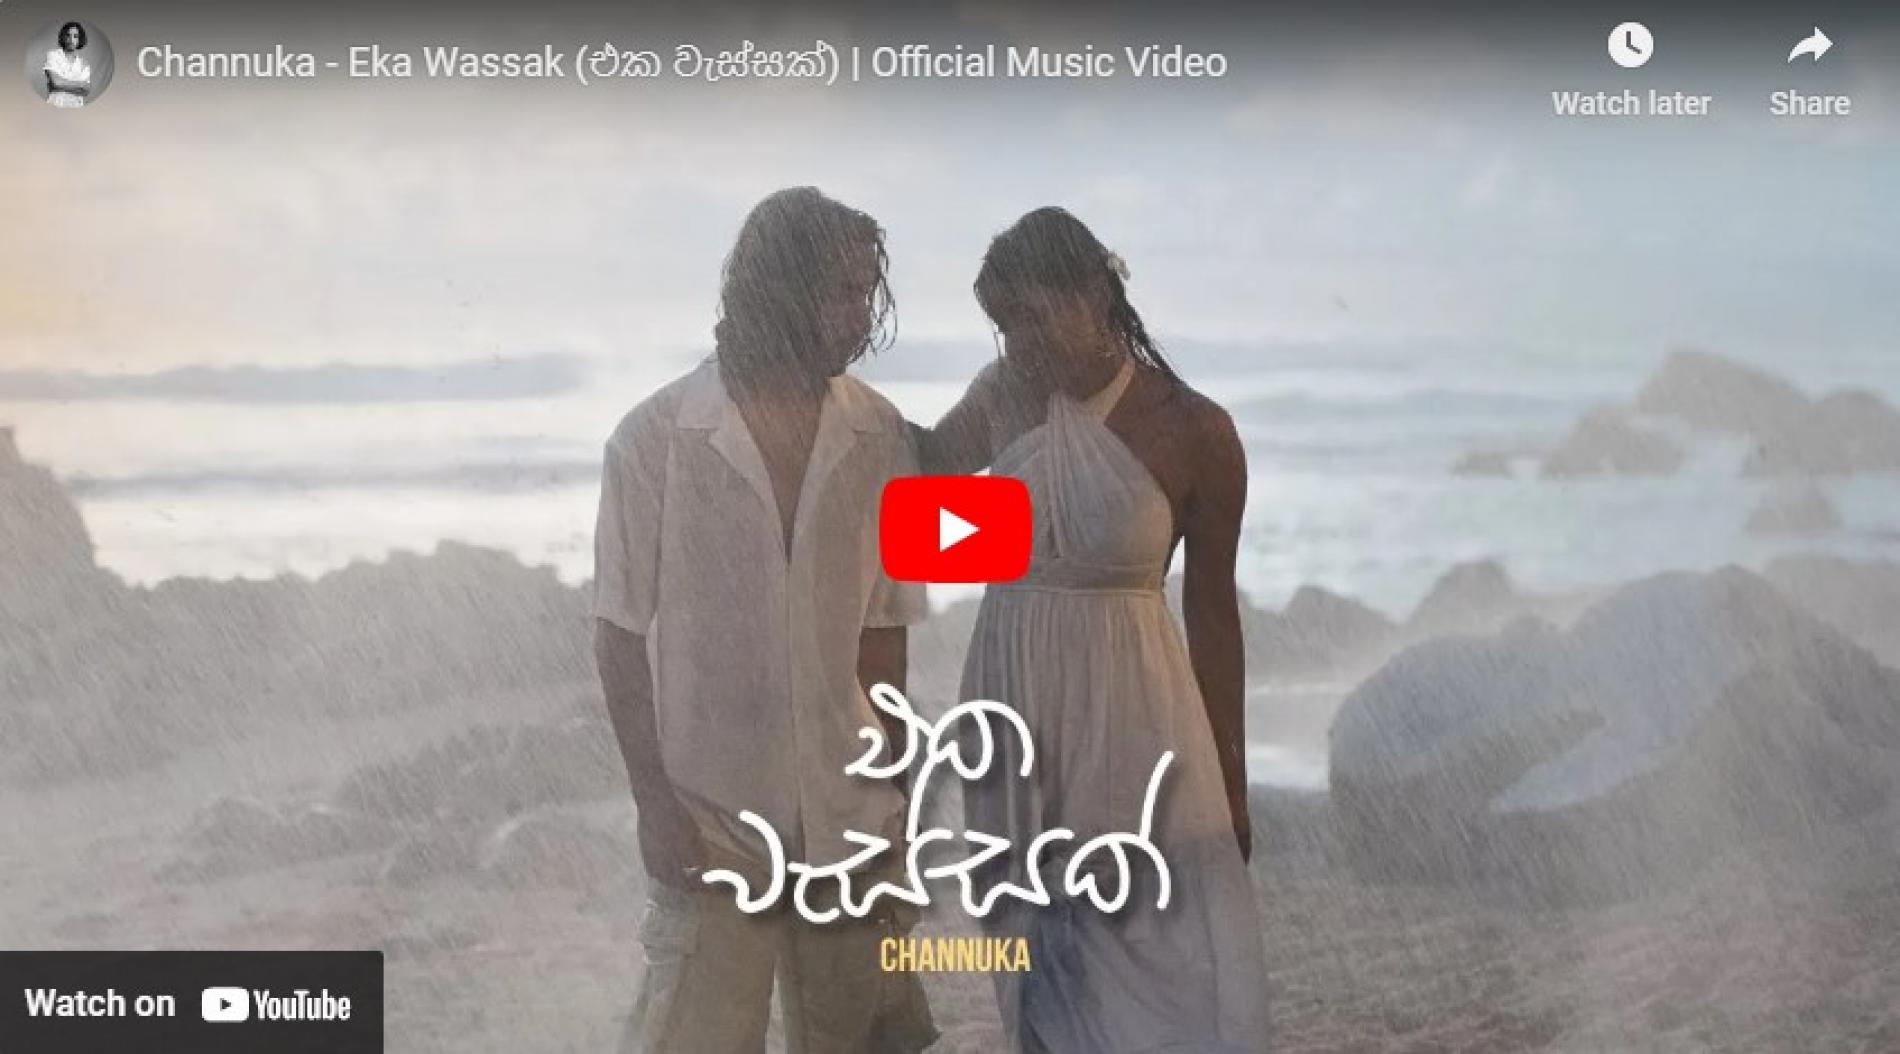 New Music : Channuka – Eka Wassak (එක වැස්සක්) | Official Music Video